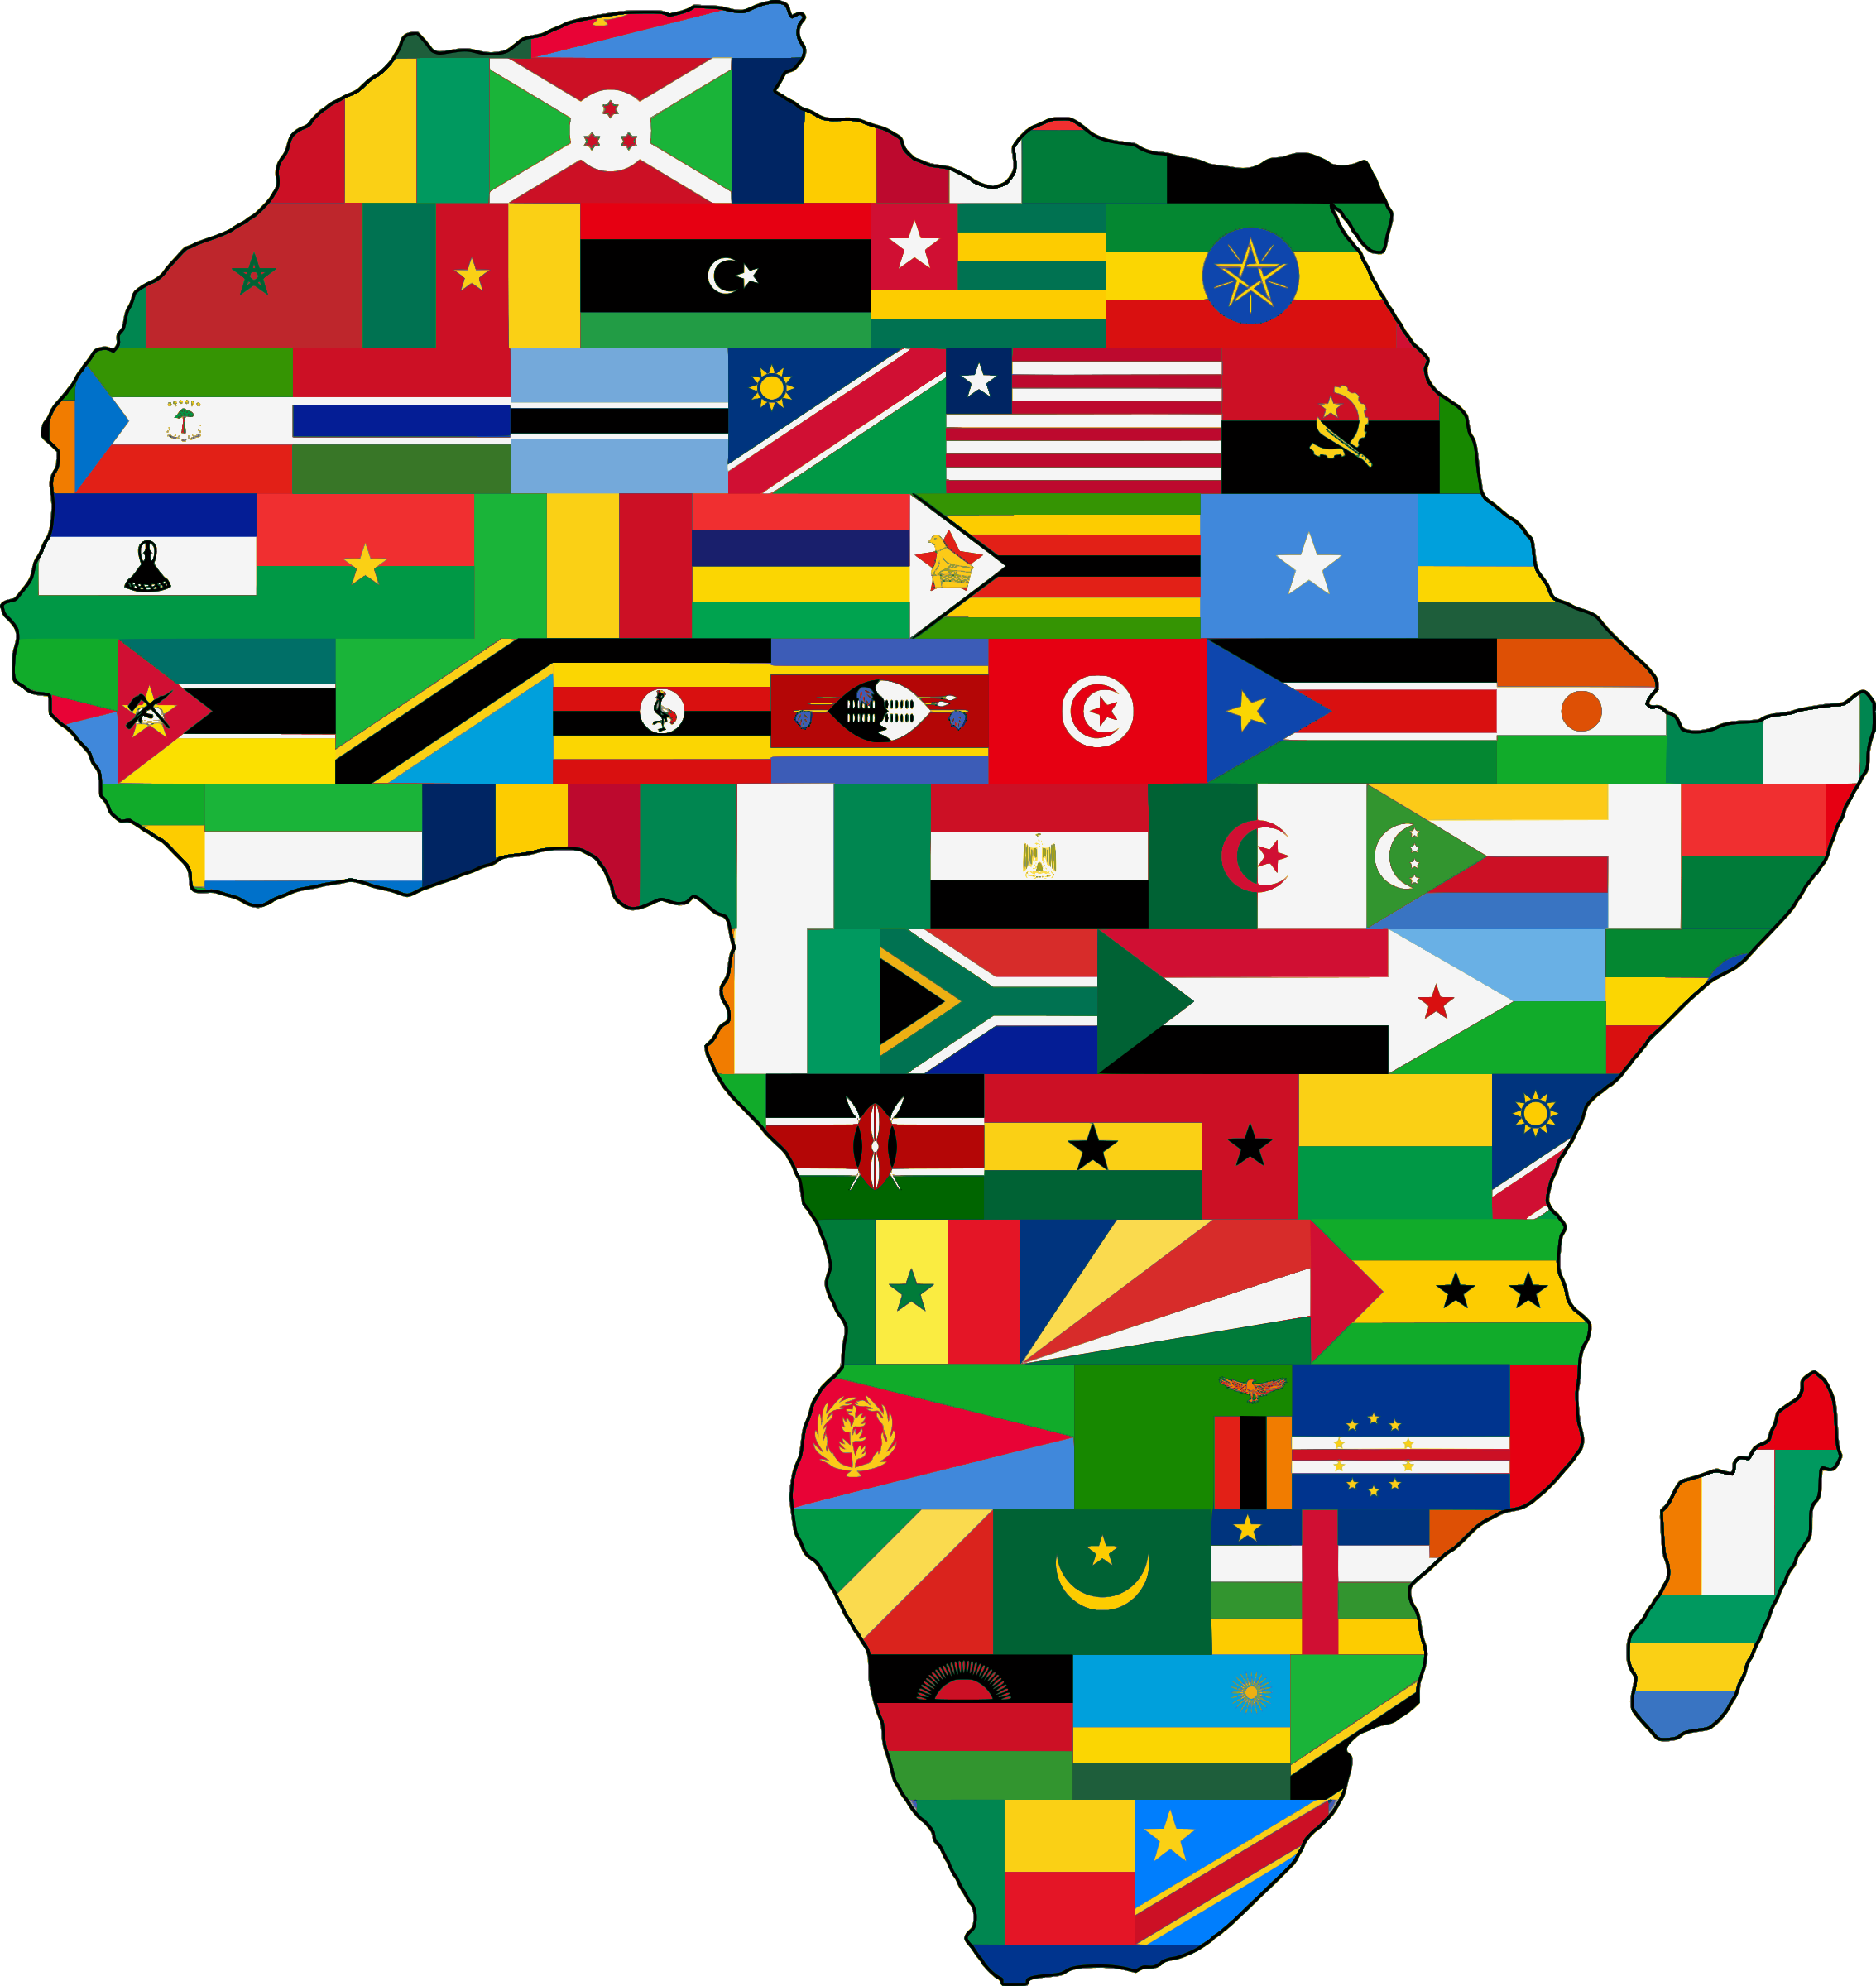 African flag clipart - ClipartFox